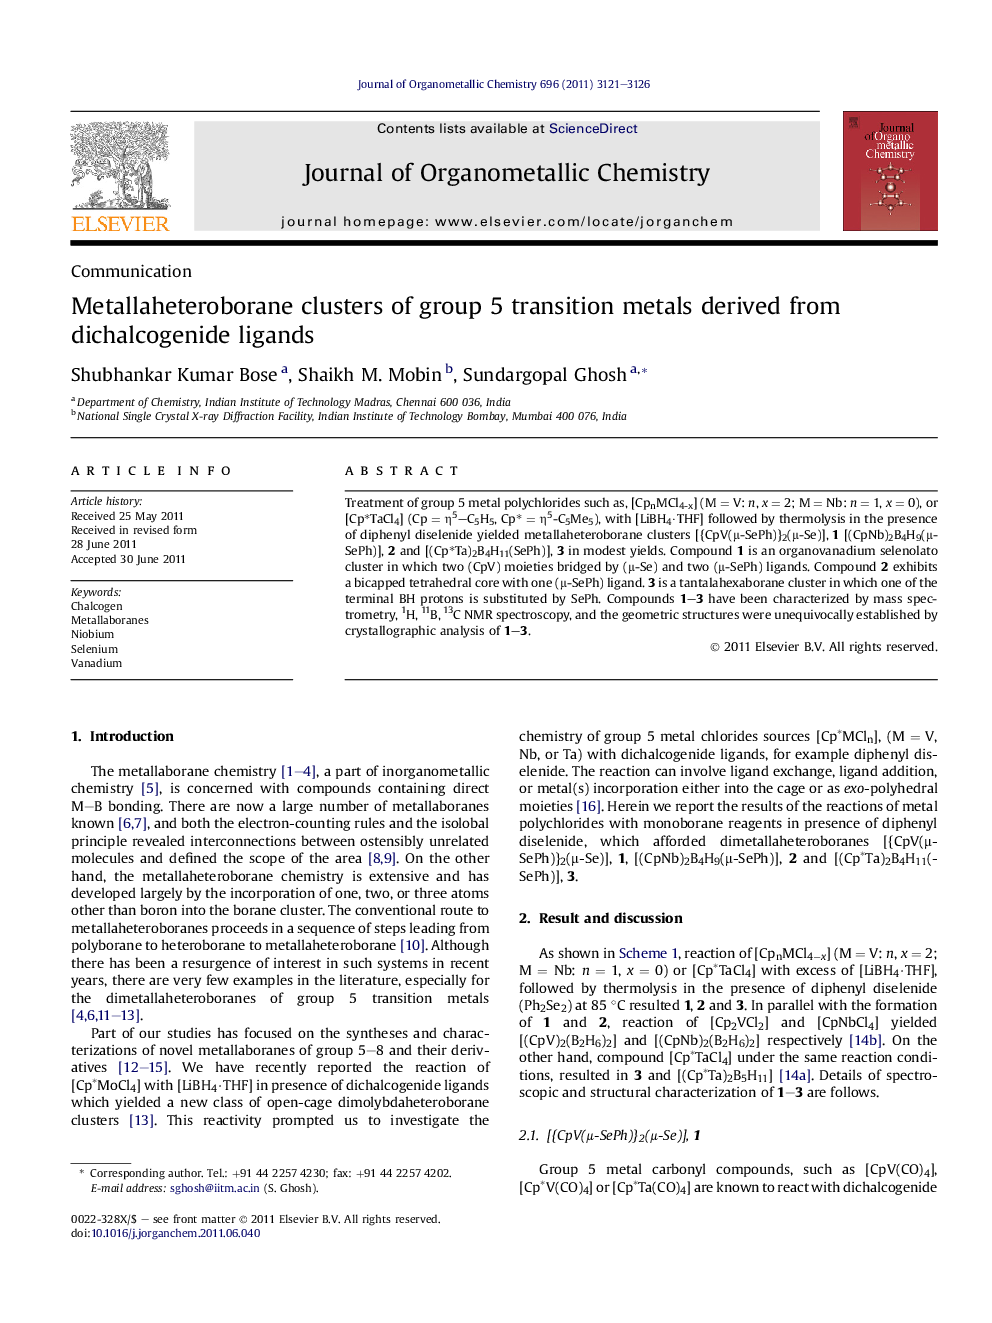 Metallaheteroborane clusters of group 5 transition metals derived from dichalcogenide ligands